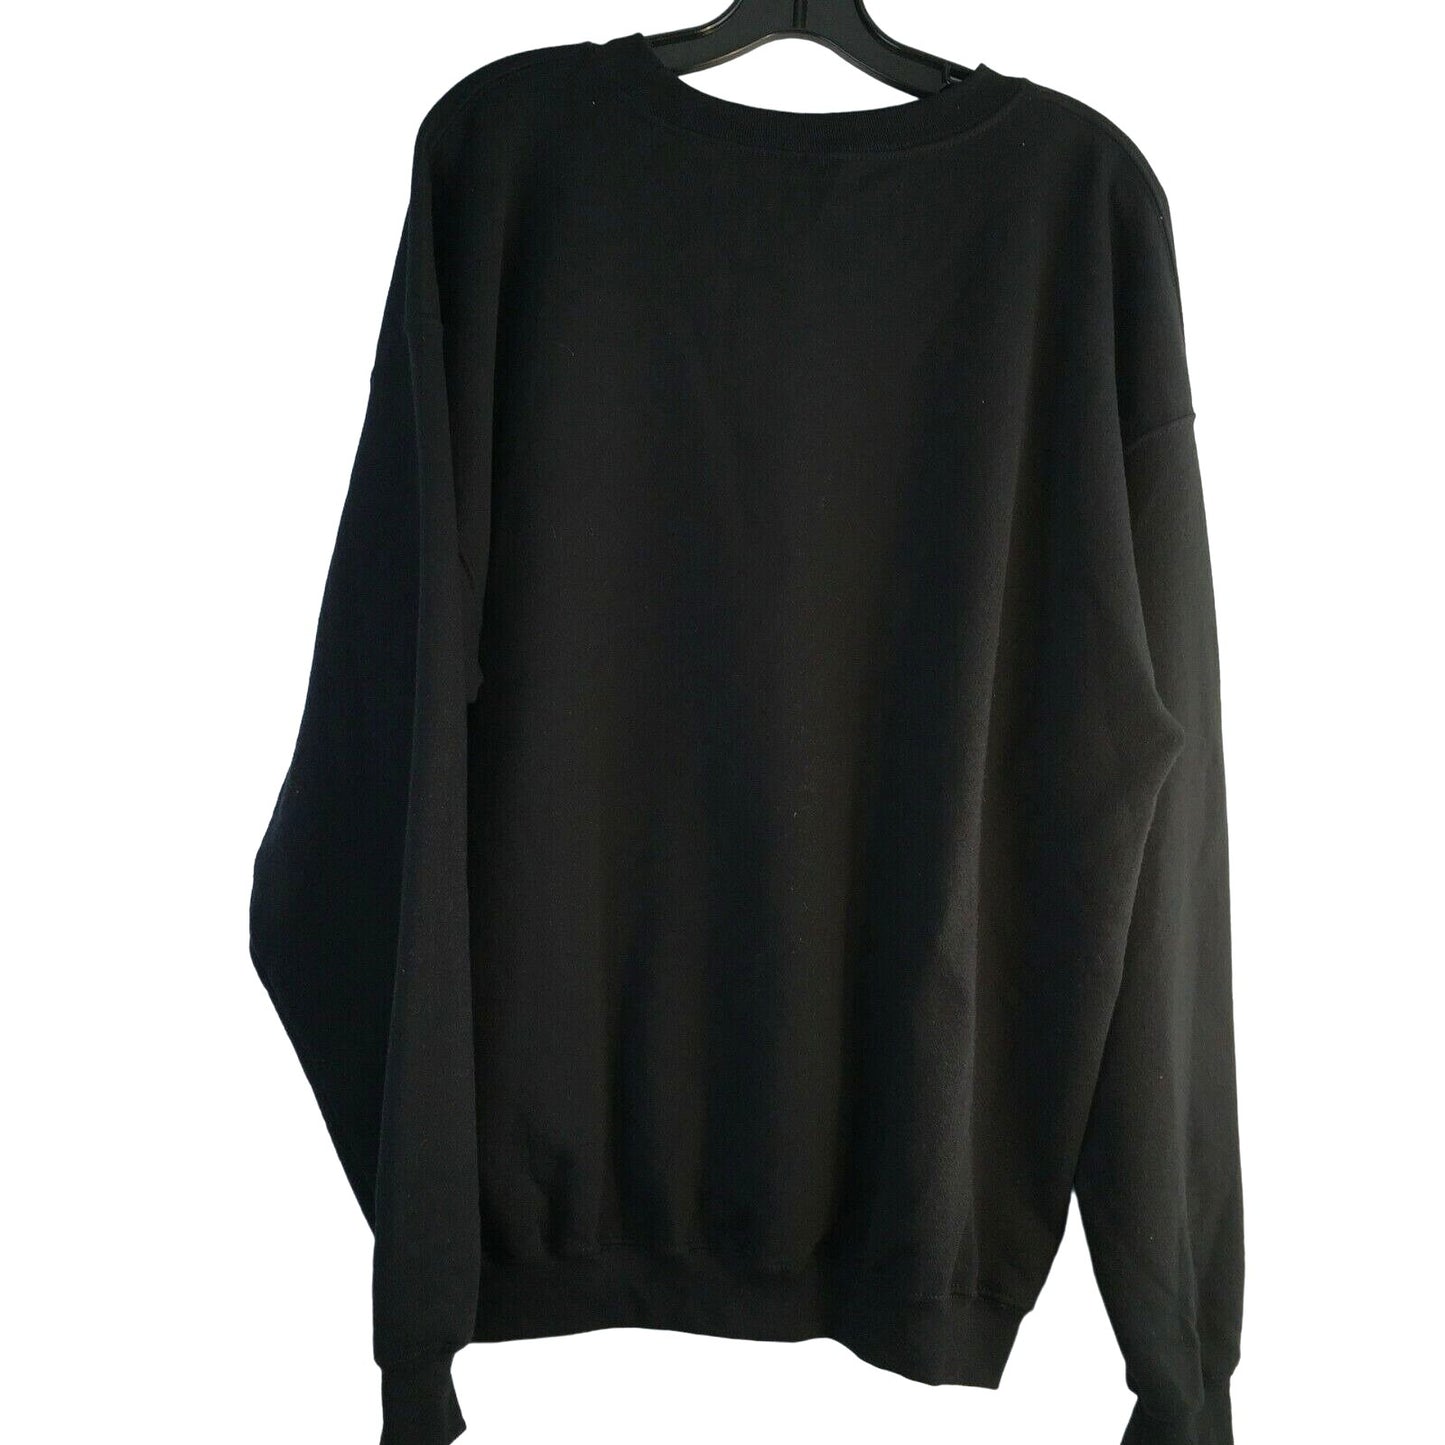 AC/DC Mens Black Crew Neck Long Sleeve Graphic Print Pullover Sweatshirt Size XL